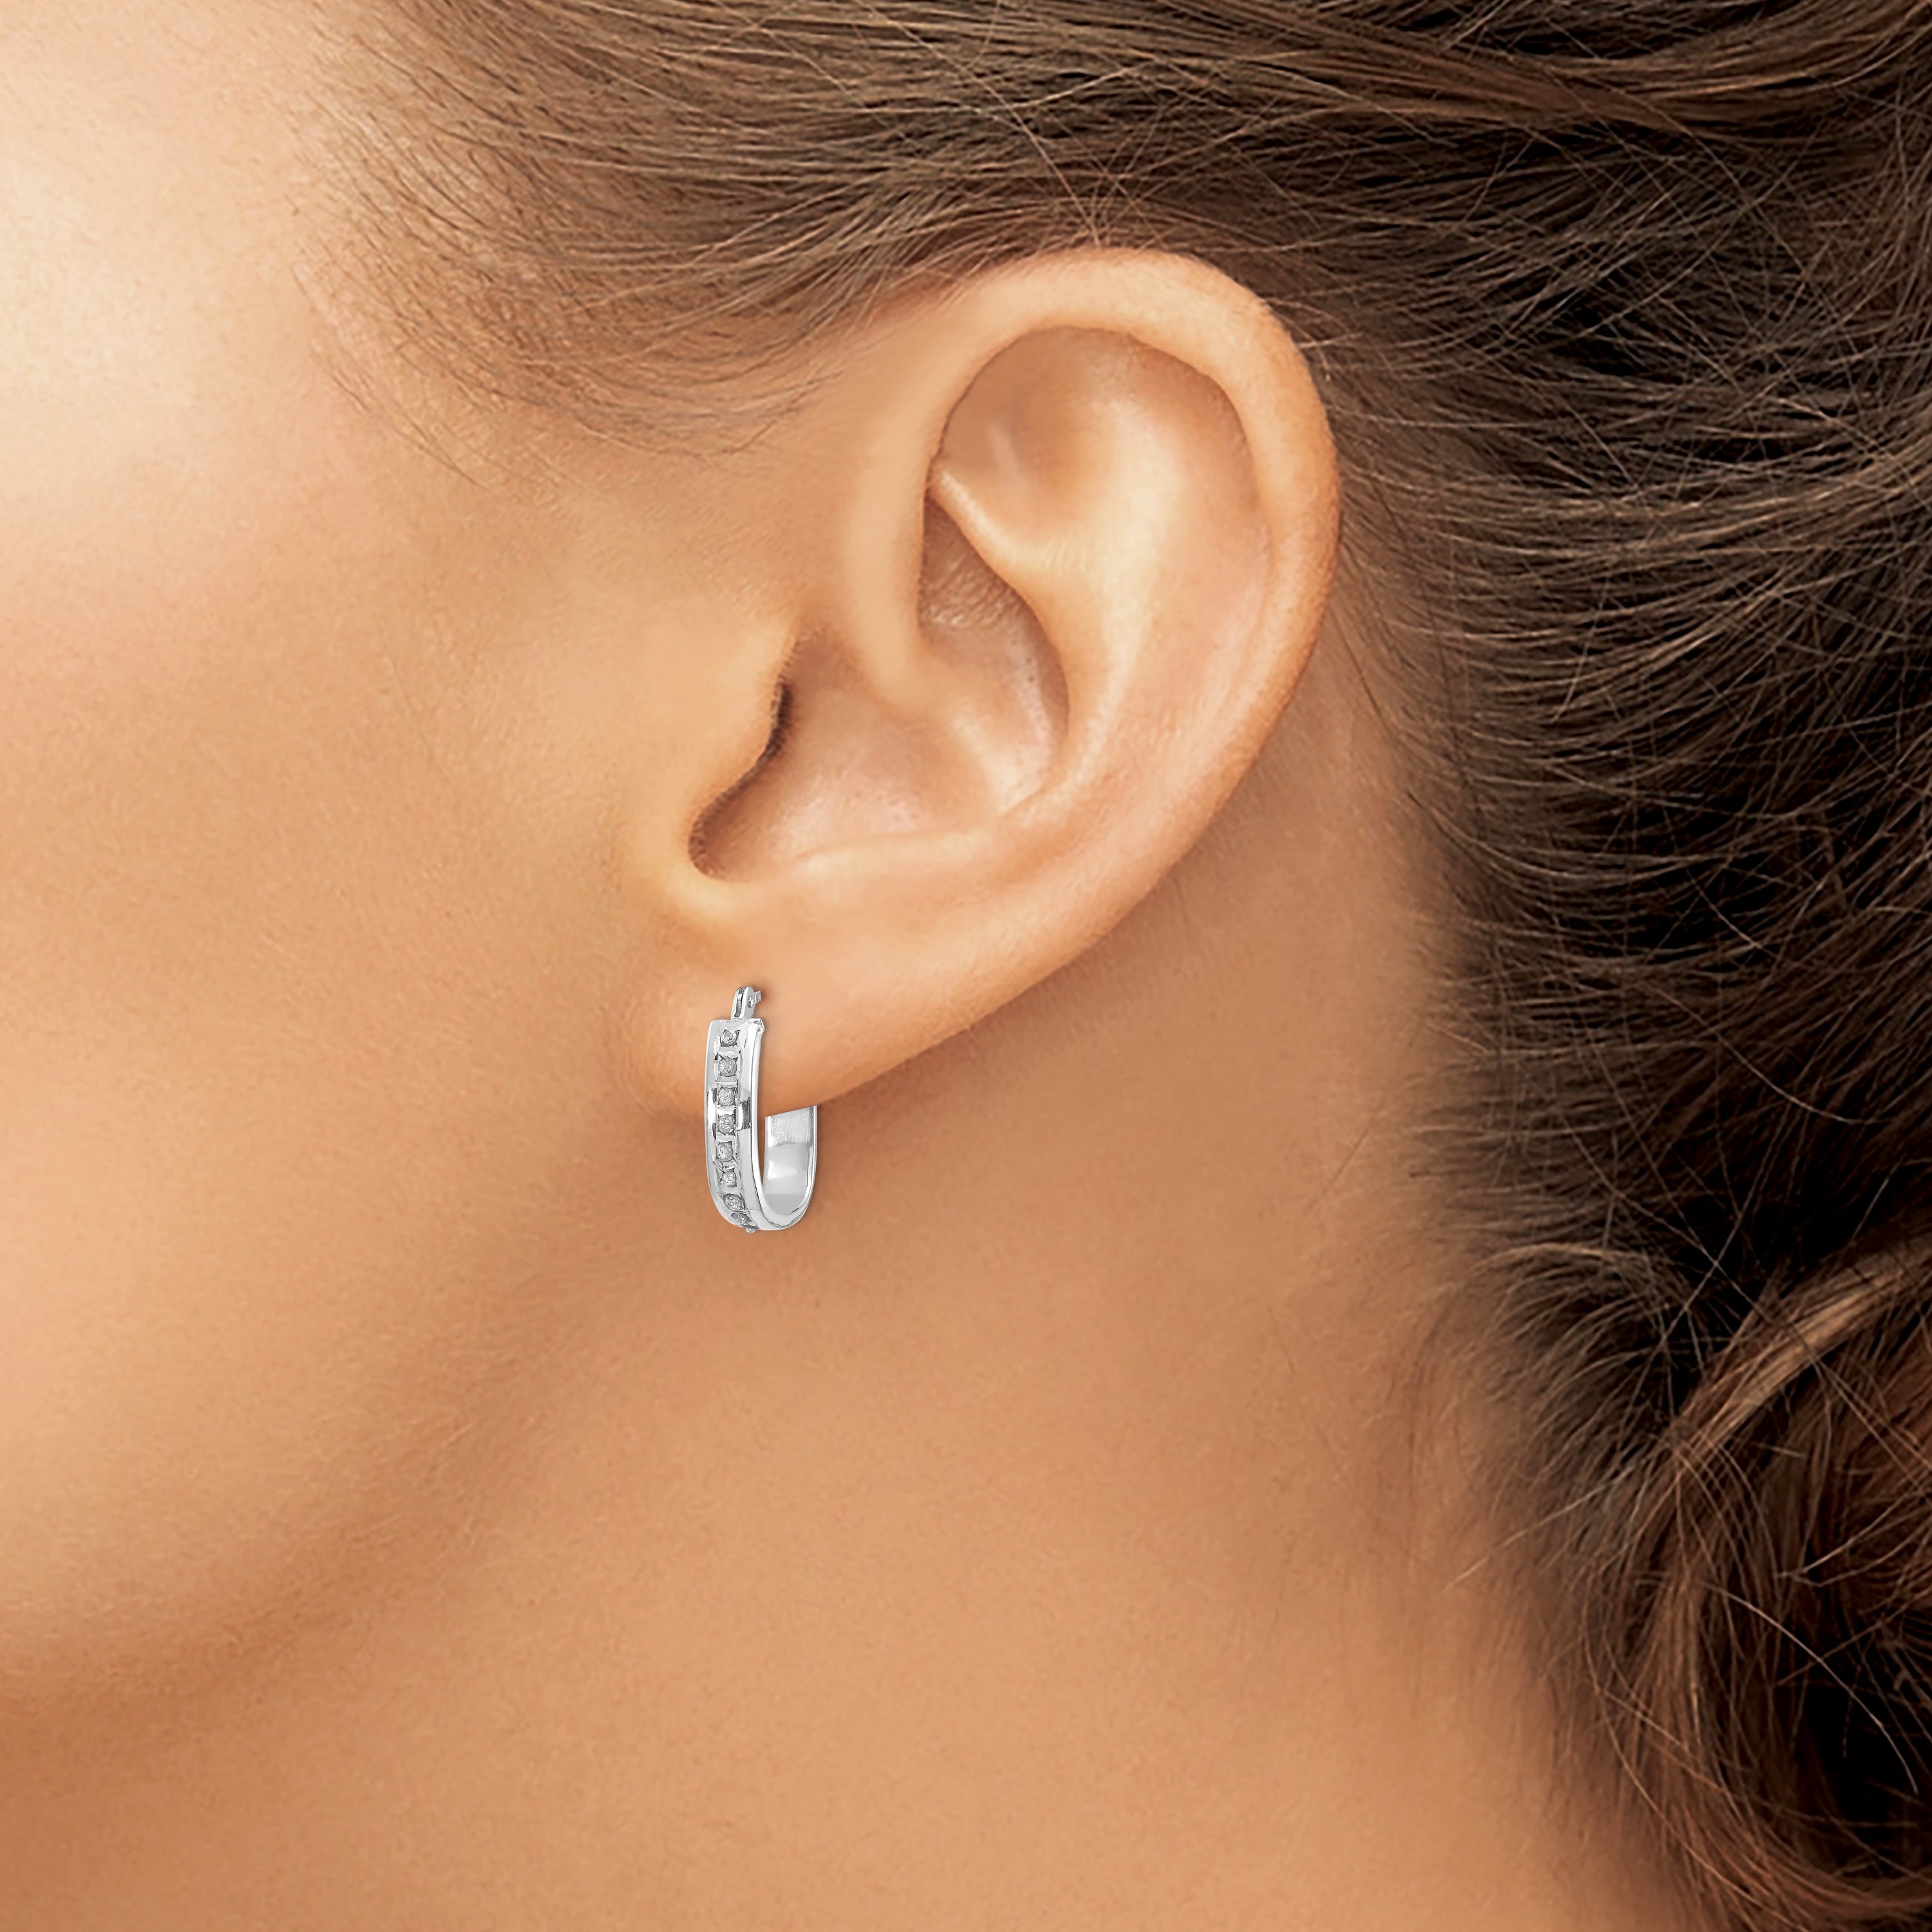 14k White Gold Diamond Fascination Squared Hinged Hoop Earrings